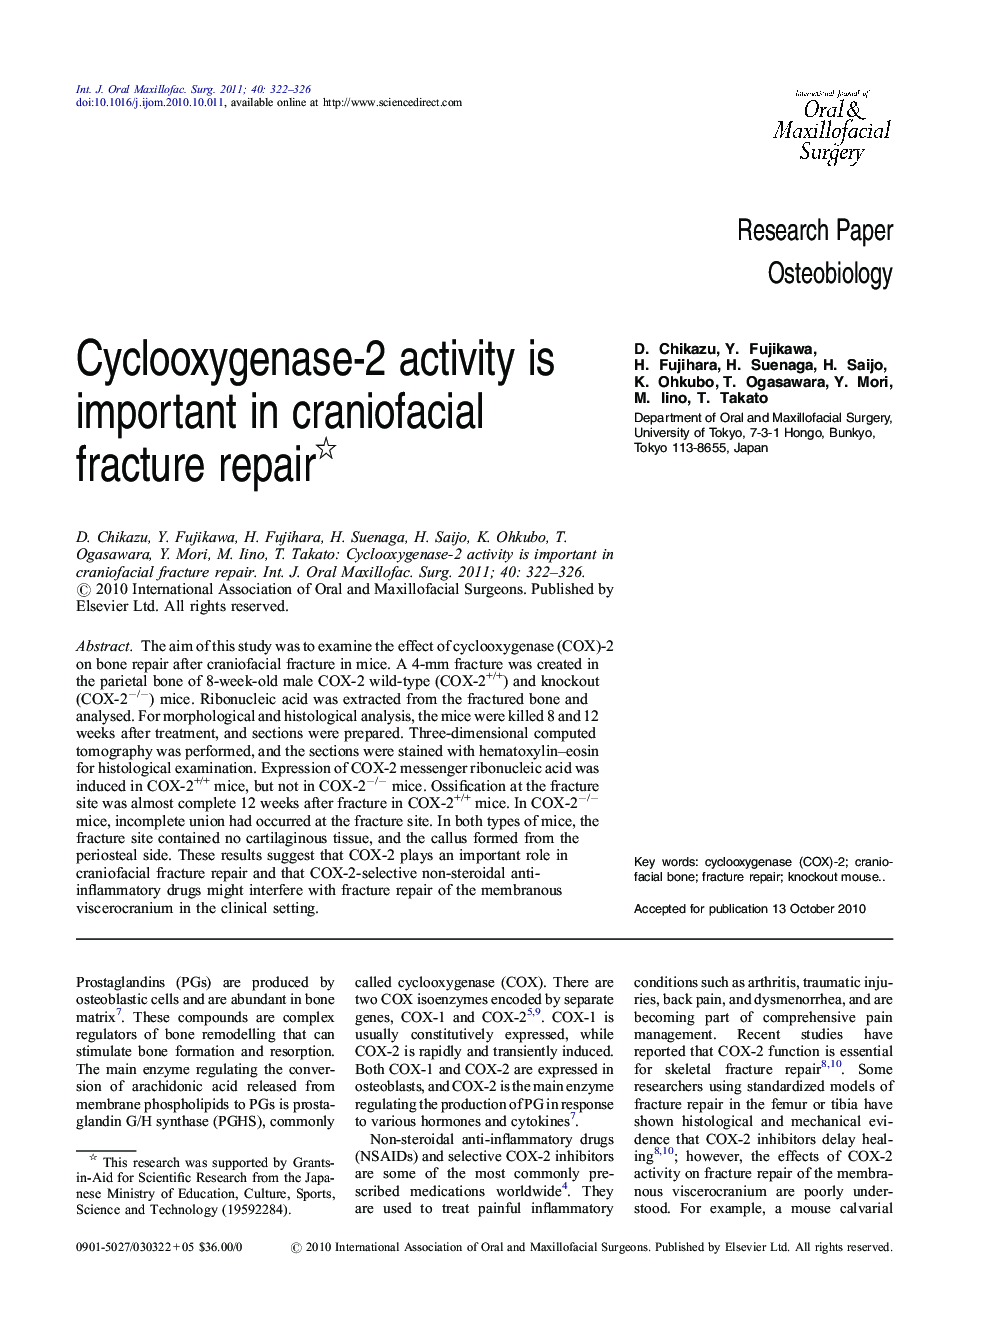 Cyclooxygenase-2 activity is important in craniofacial fracture repair